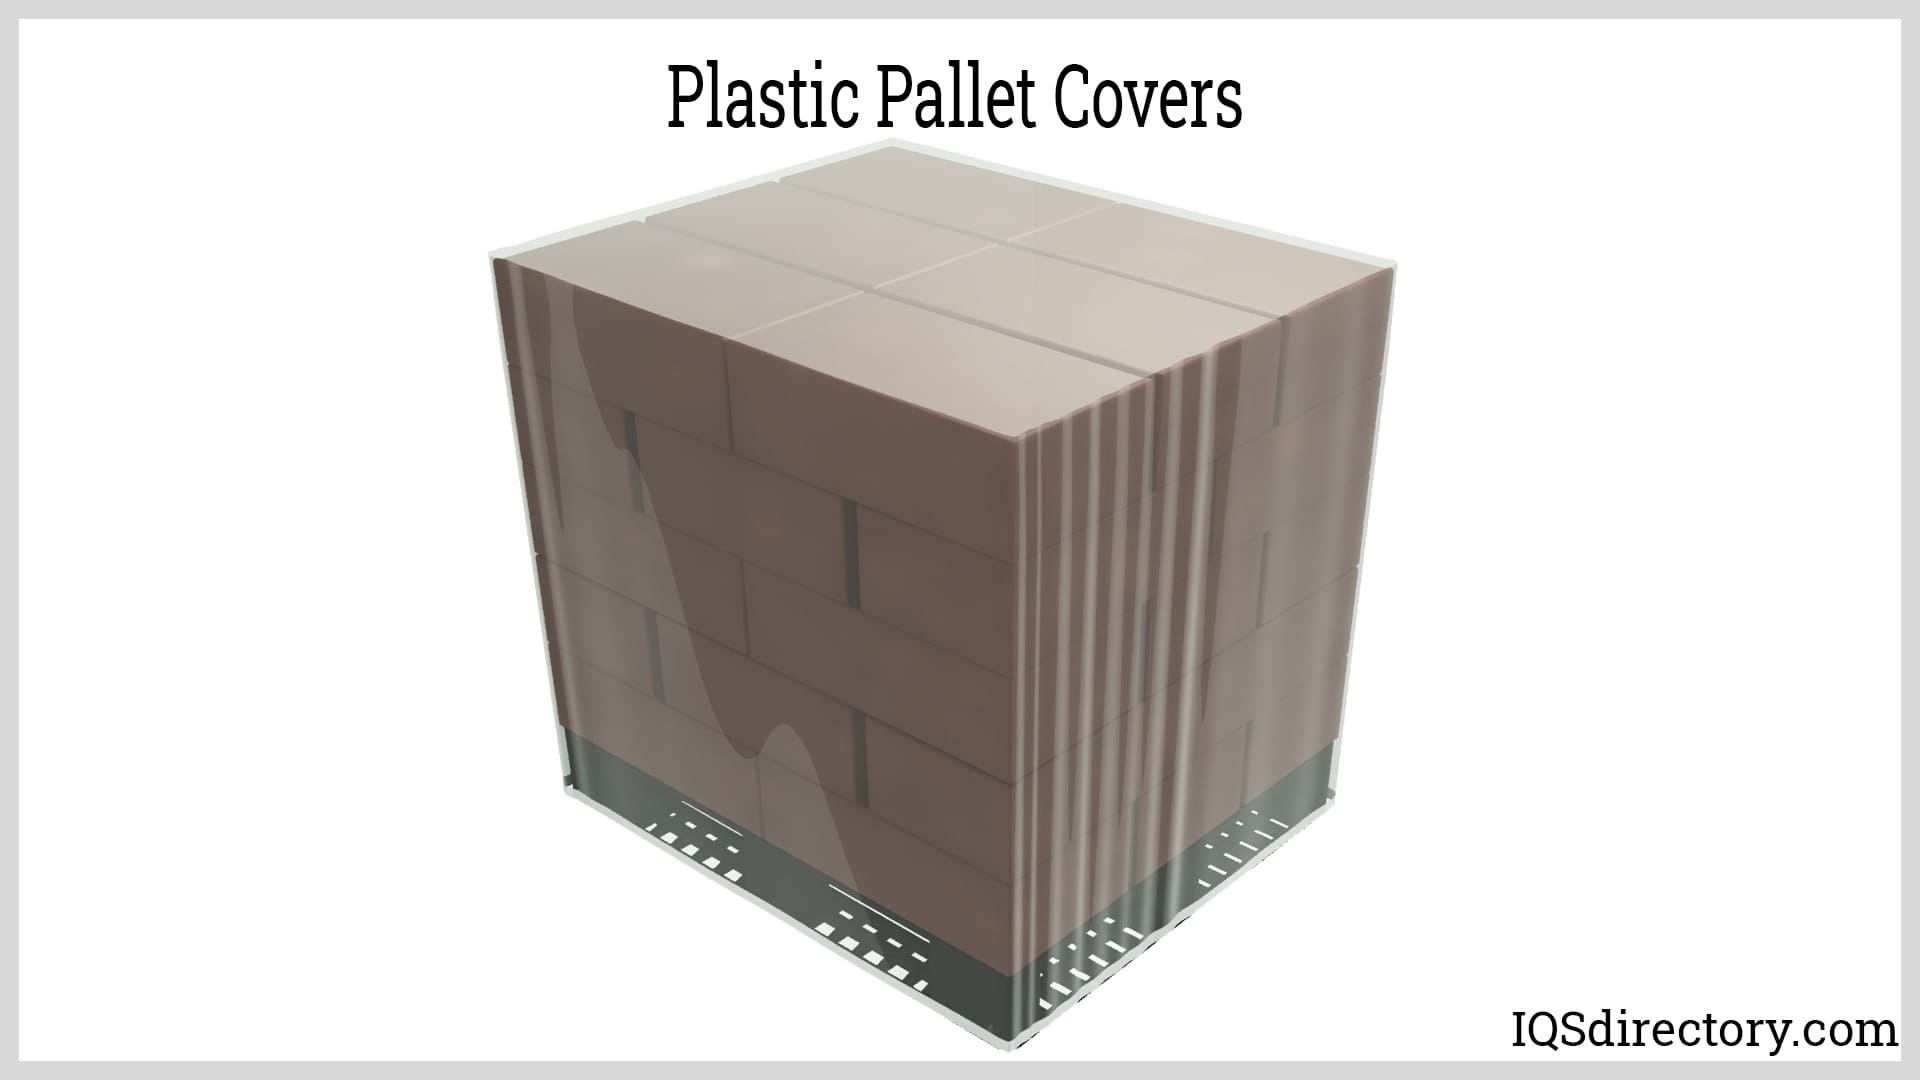 Plastic Pallet Covers